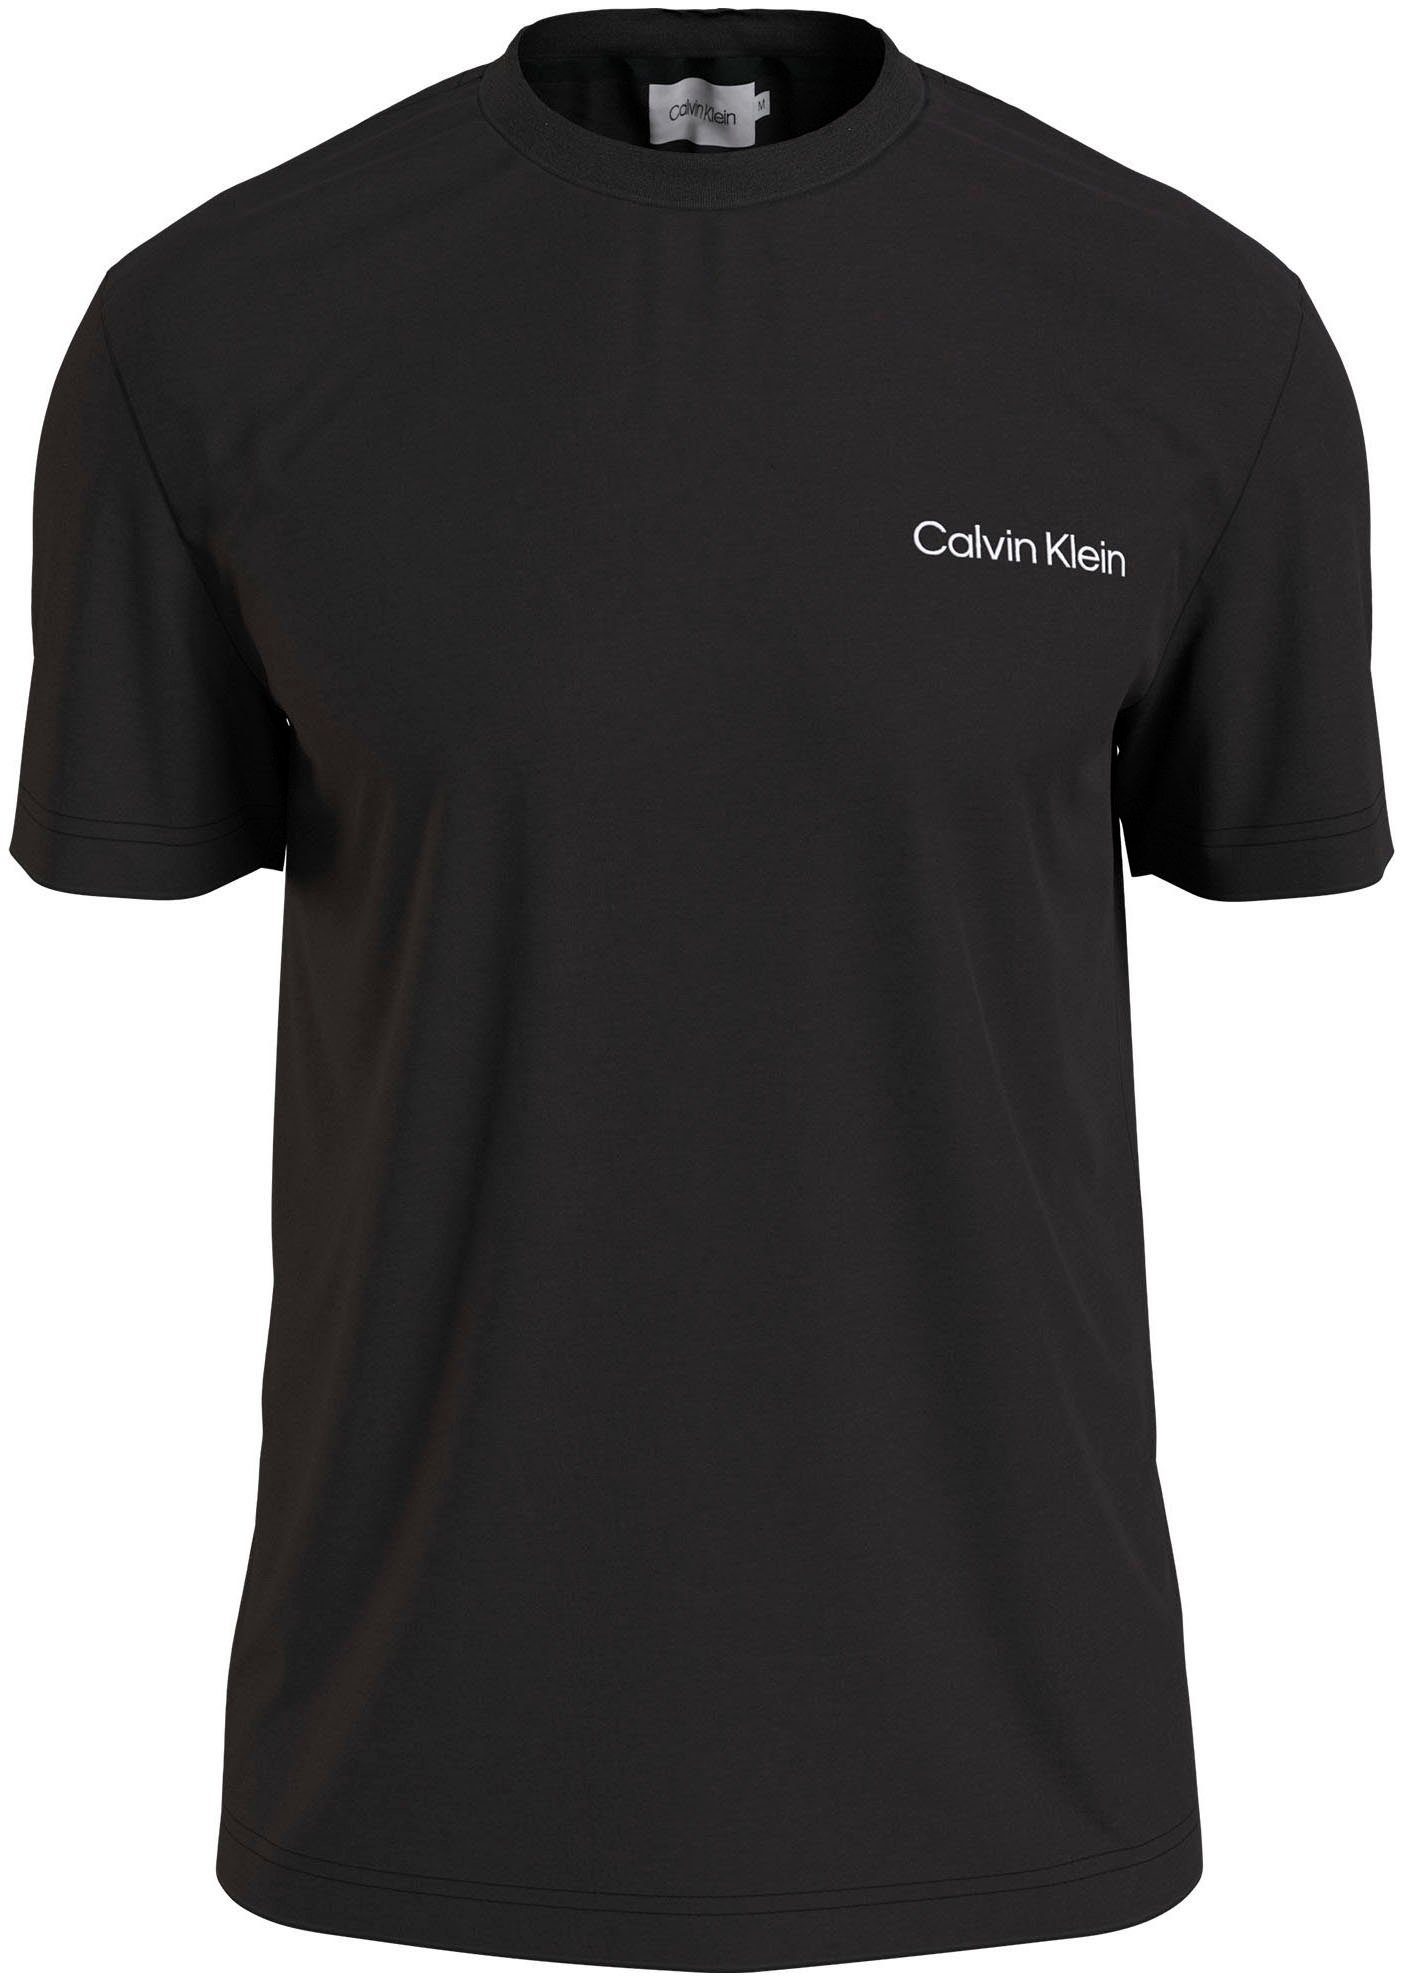 Calvin Klein T-shirt ANGLED BACK LOGO T-SHIRT